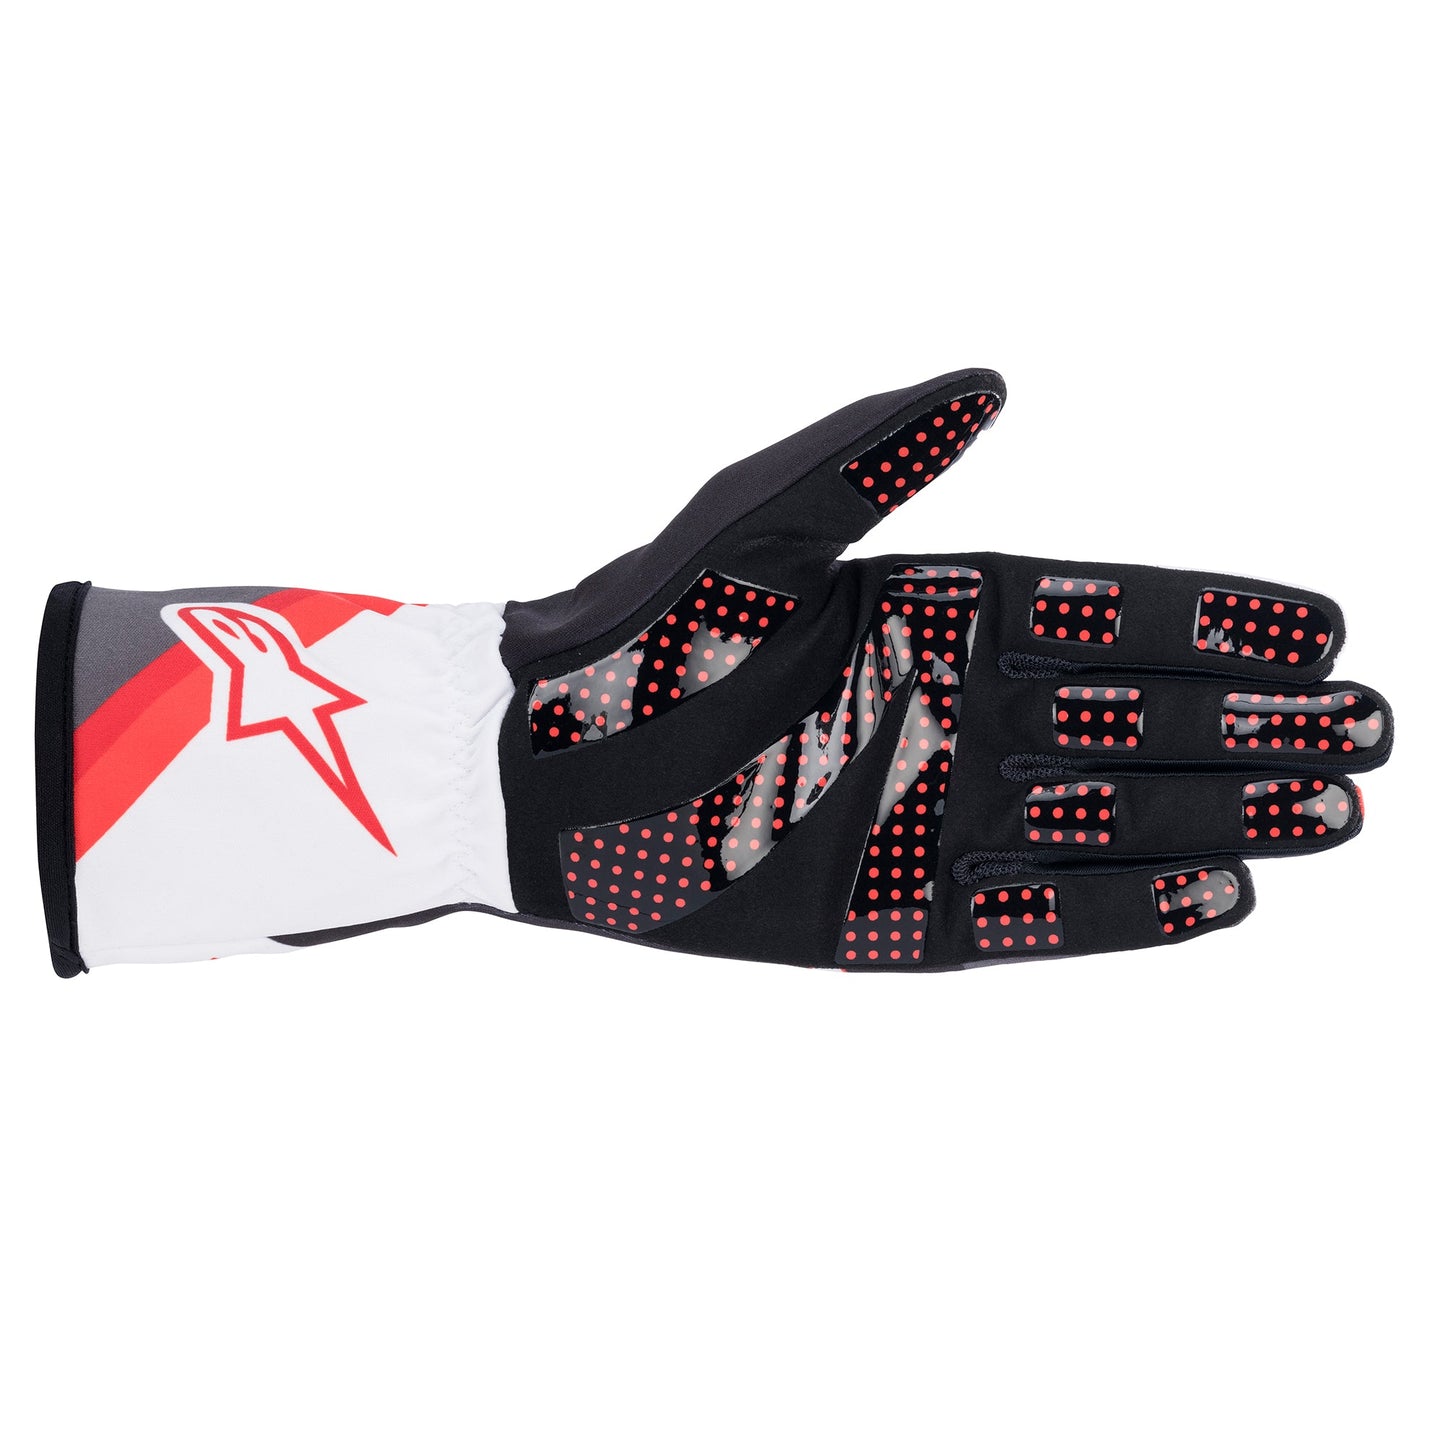 Alpinestars 2022 Tech-1 K Race V2 Graphic Glove